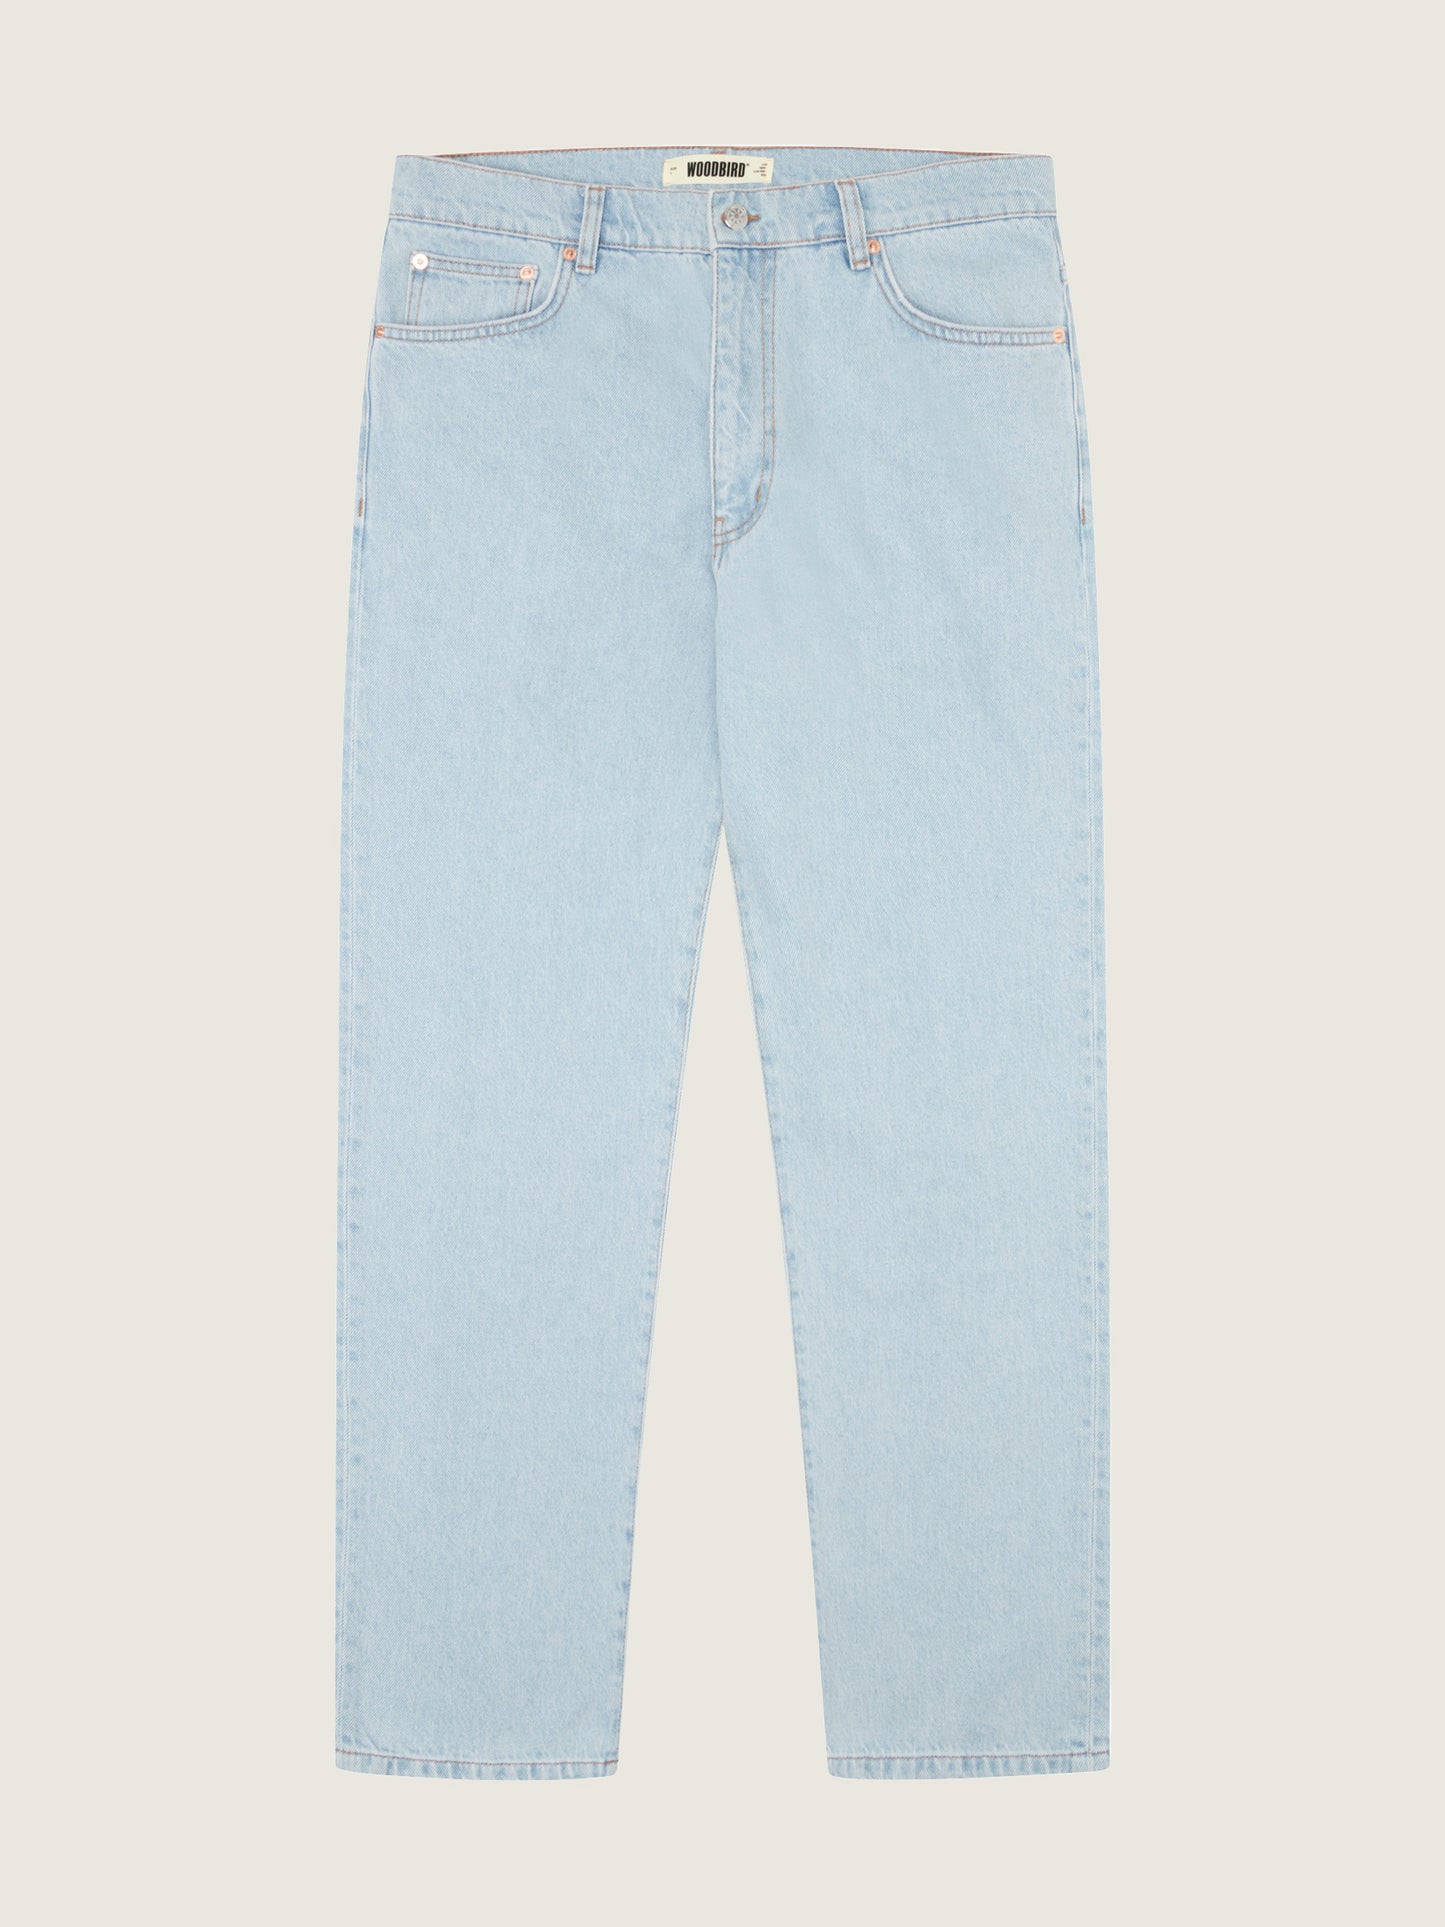 Woodbird Leroy Brando Jeans Jeans 90sBlue